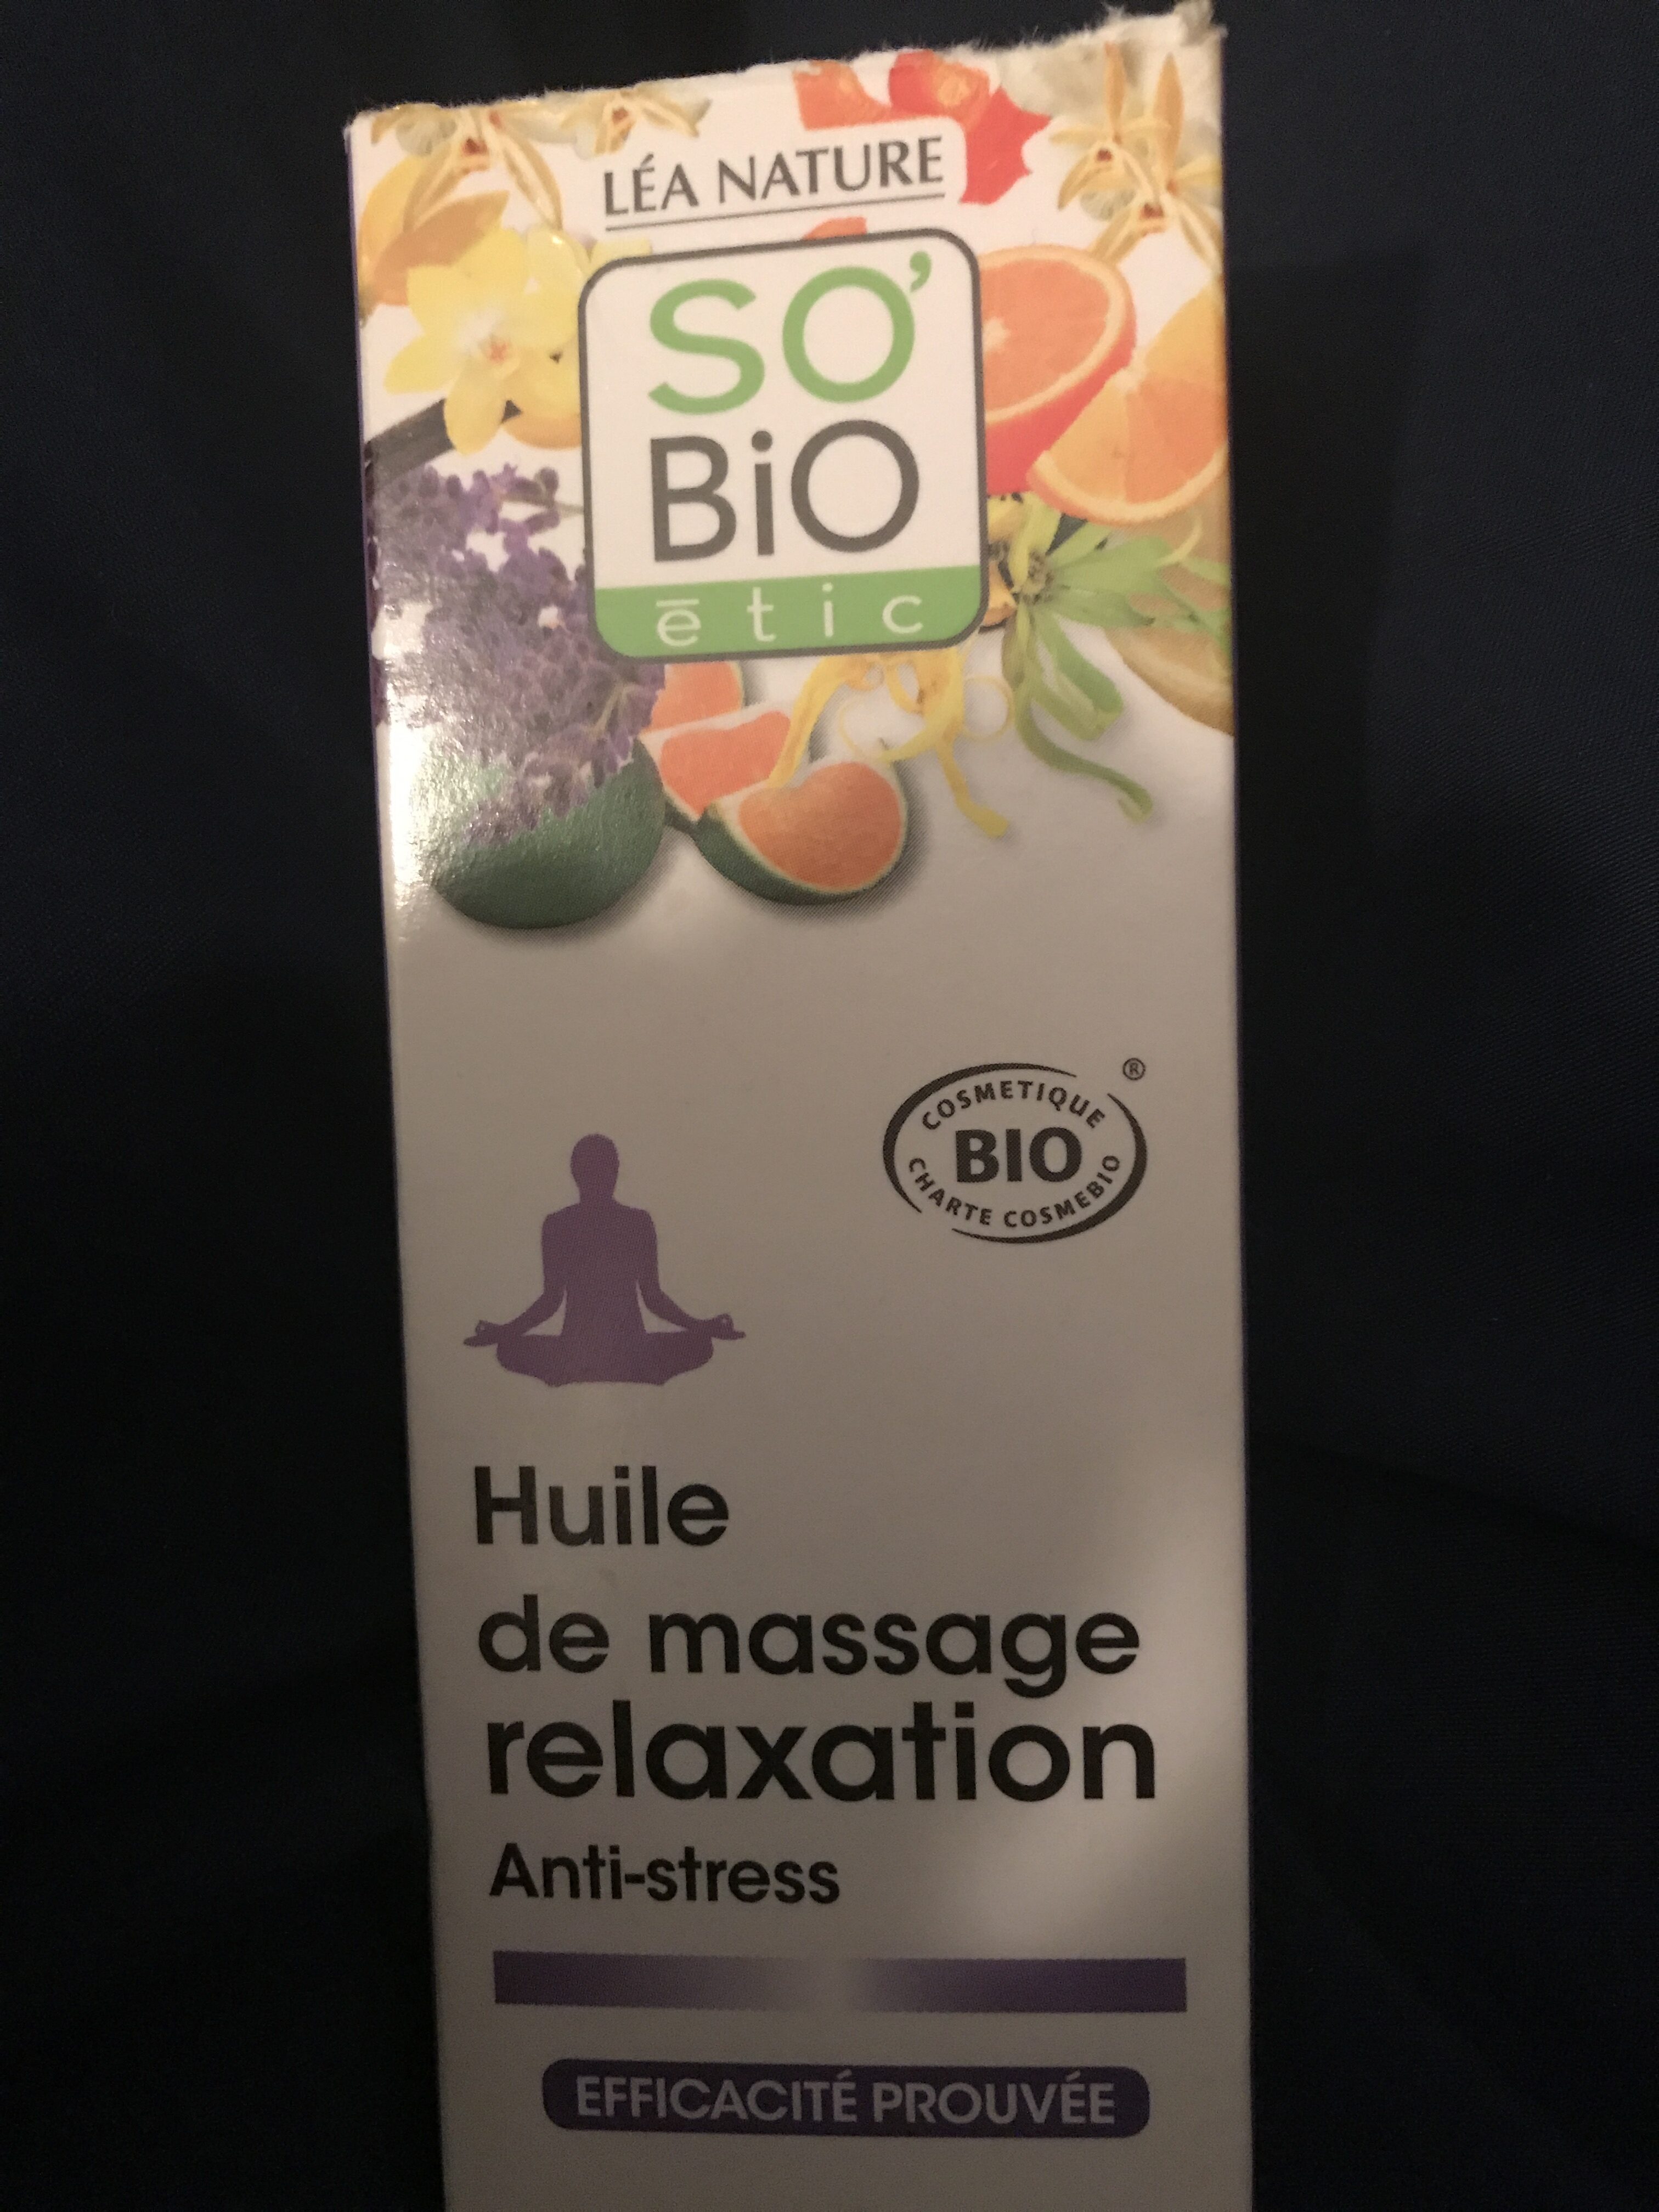 Huile de massage relaxation - Product - fr